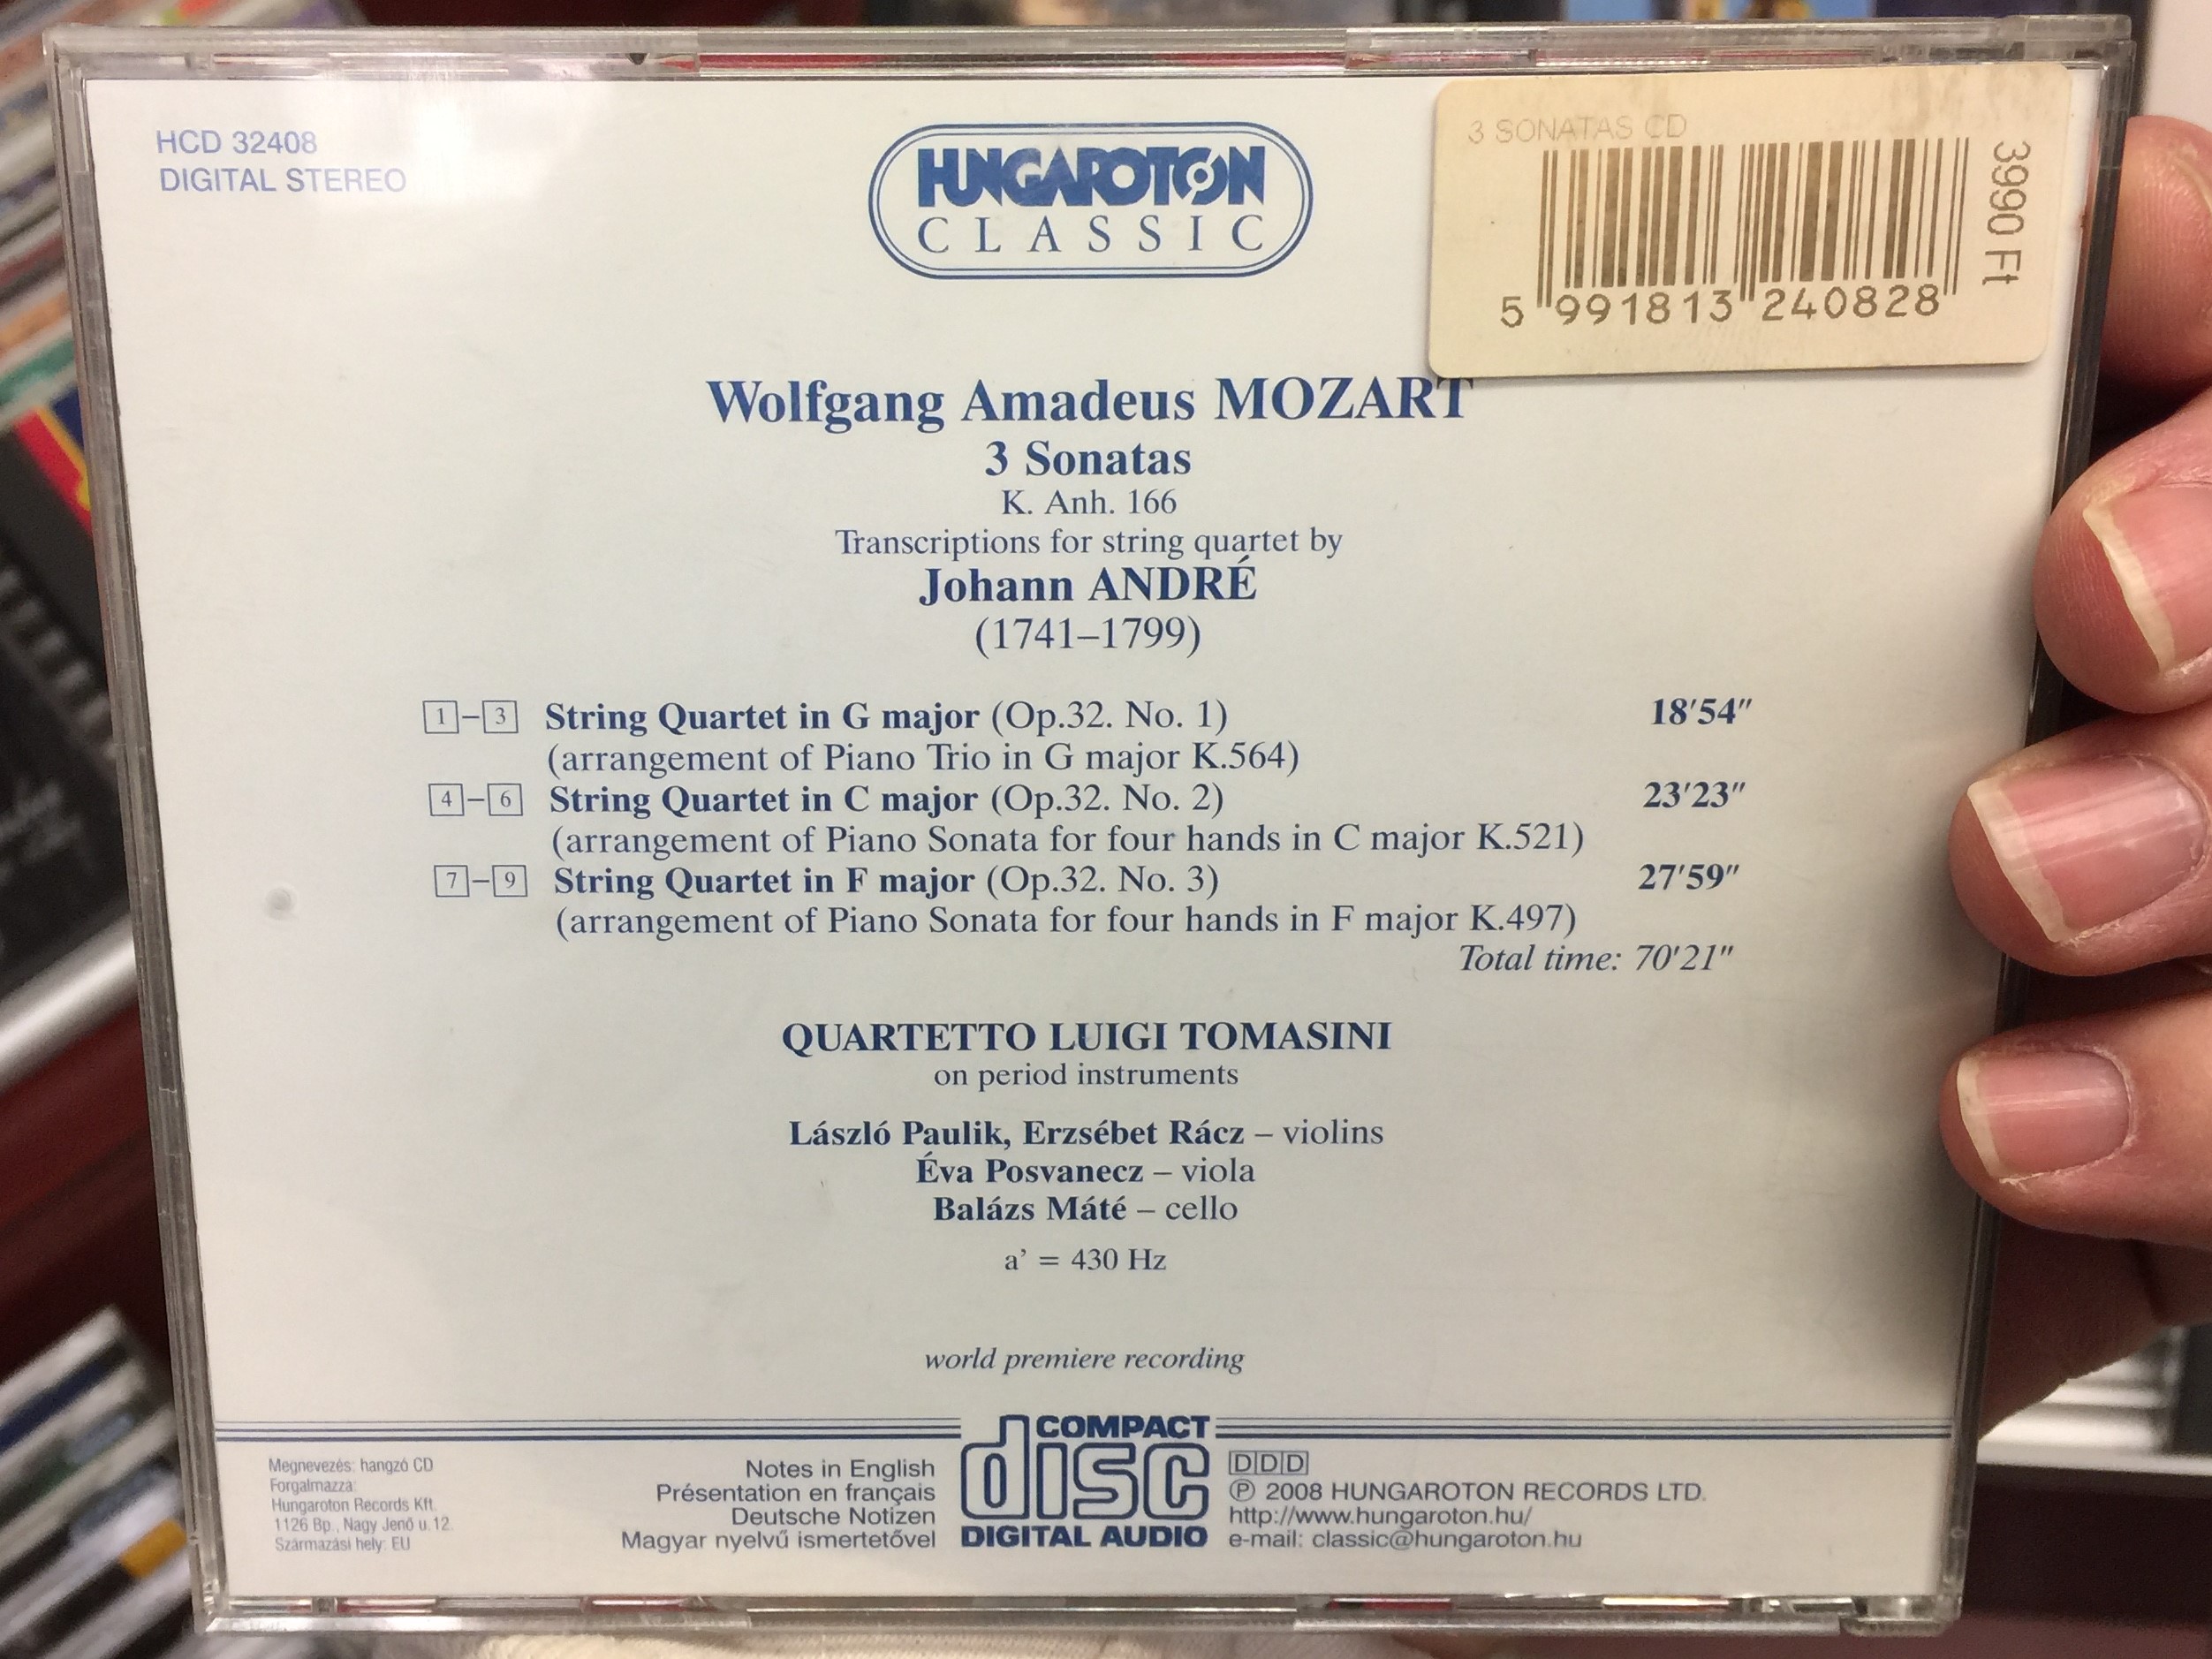 mozart-3-sonatas-k.-anh.-166-transcriptions-for-string-quartet-by-j.-andre-1794-quartetto-luigi-tomasini-on-period-instruments-hungaroton-classic-audio-cd-2008-stereo-hcd-32408.jpg